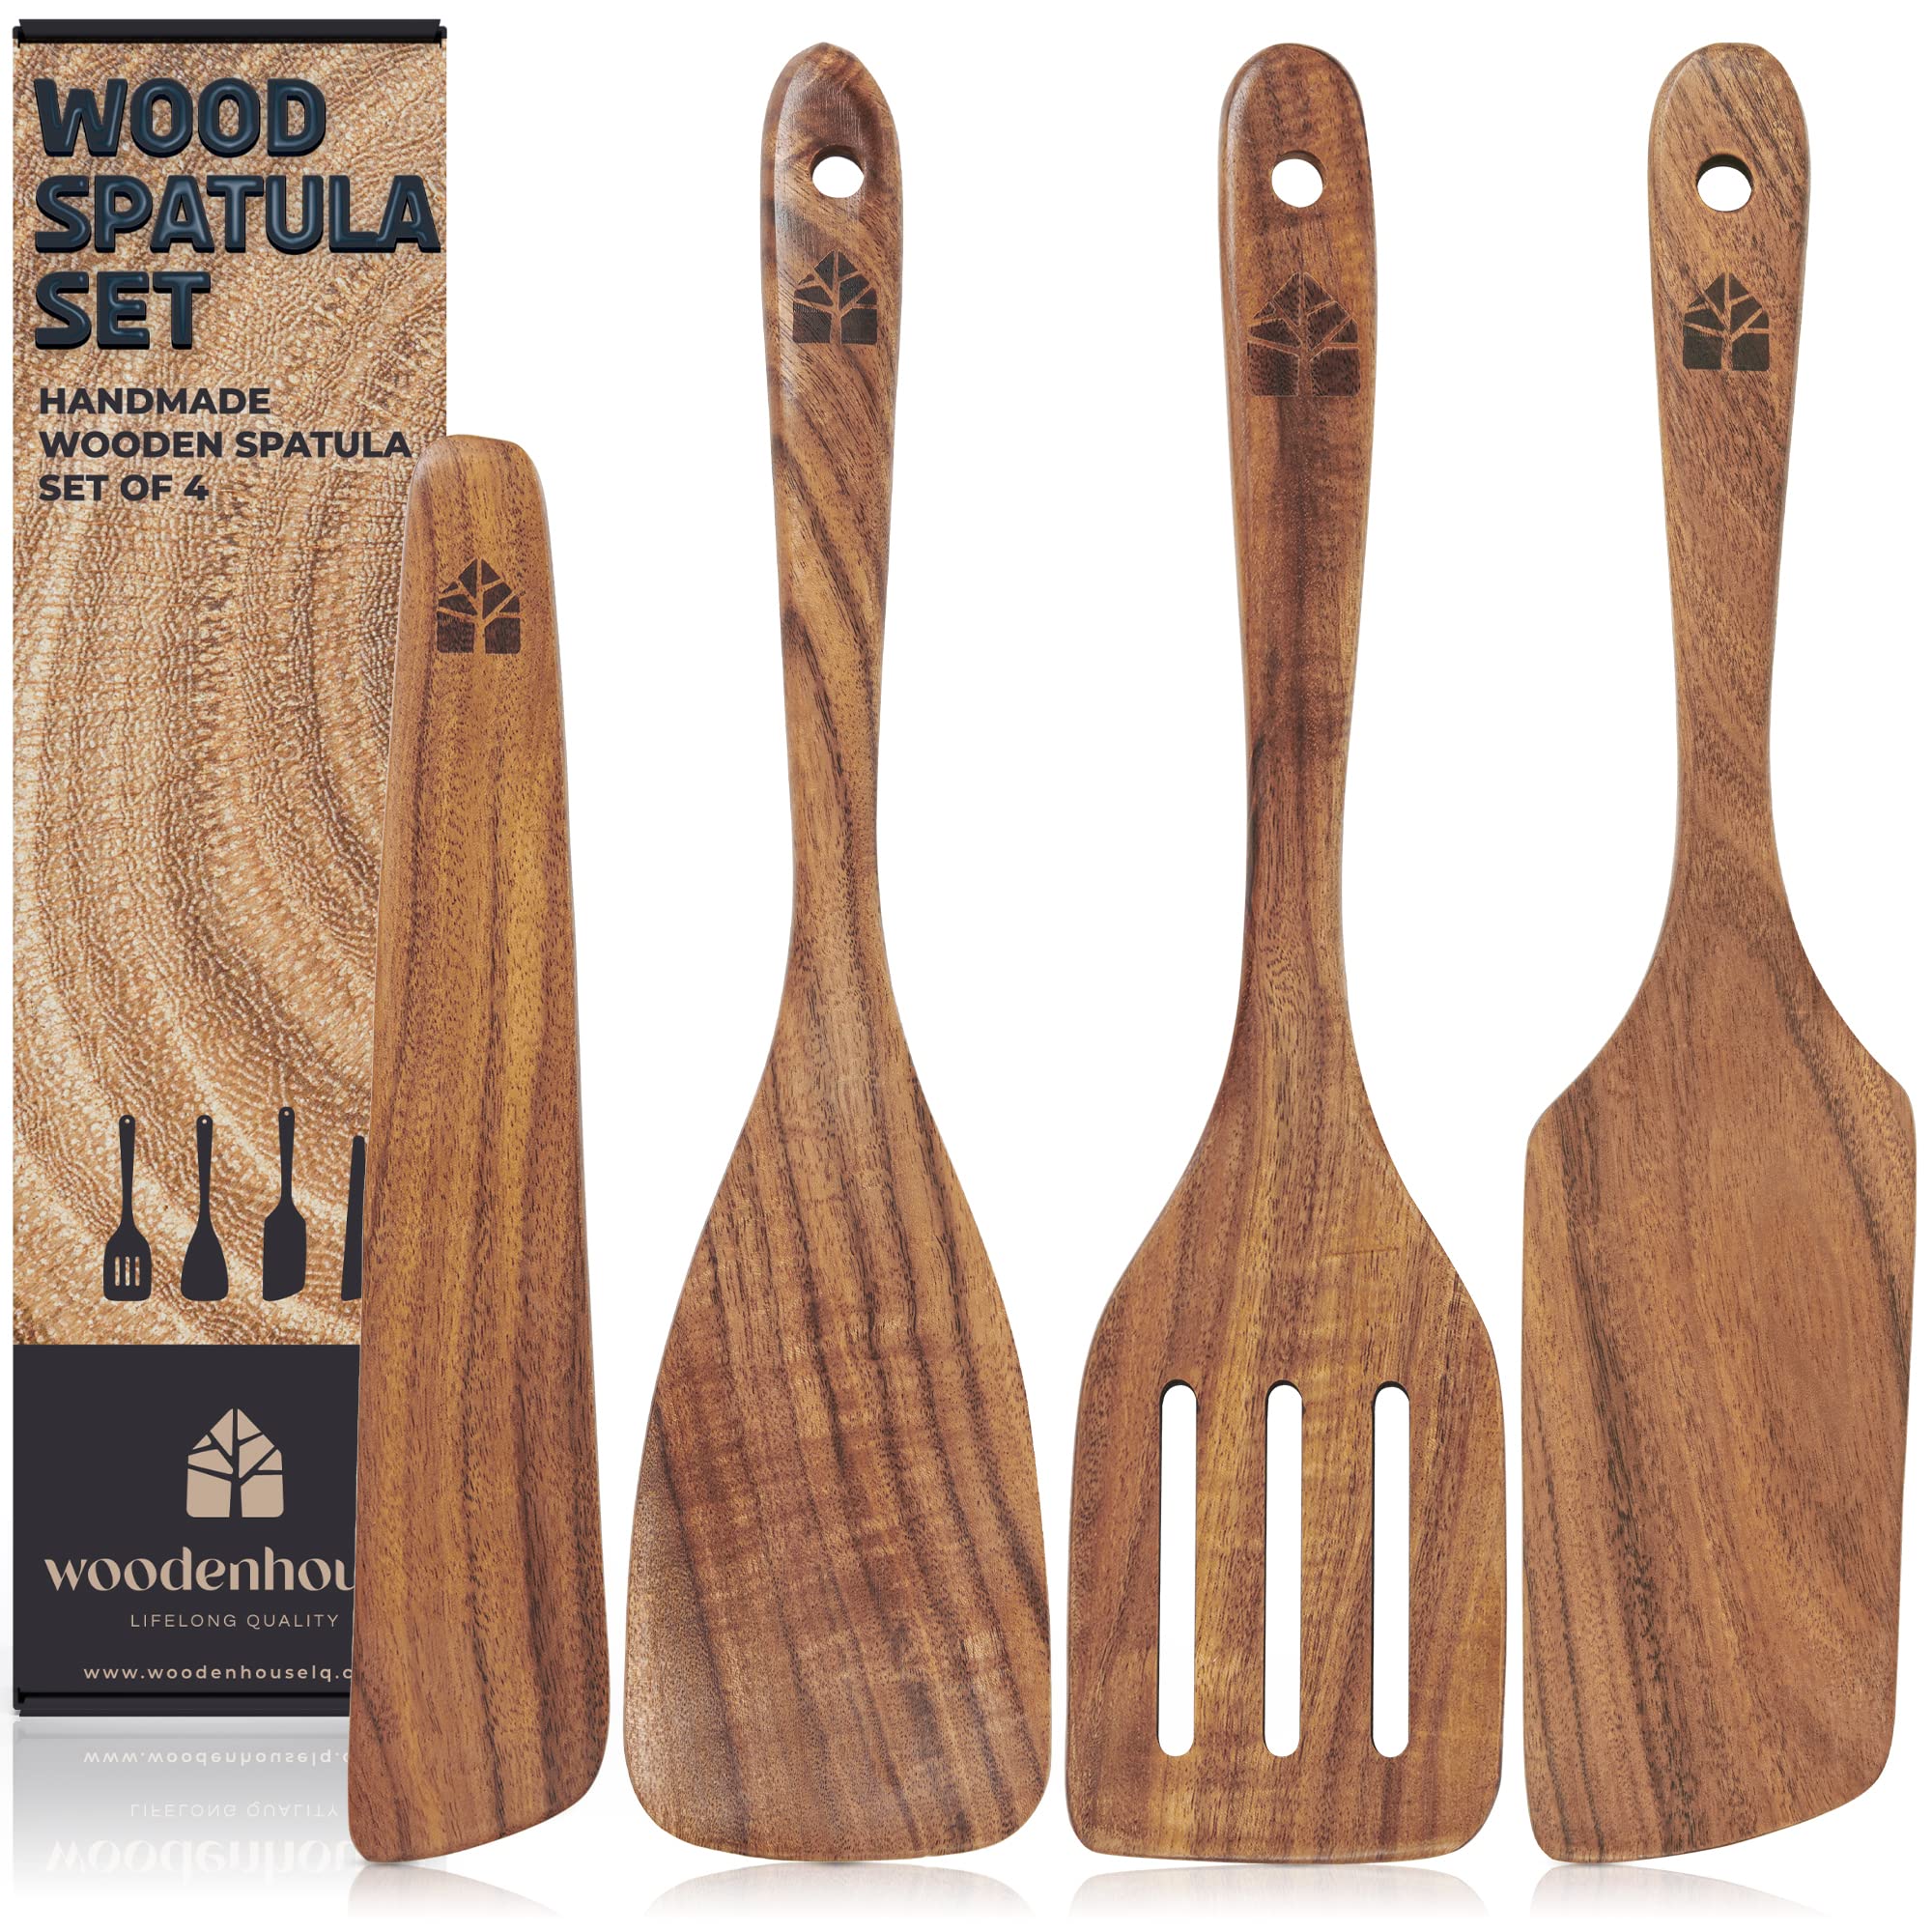 WOODENHOUSE LIFELONG QUALITY Wooden Spatula Set